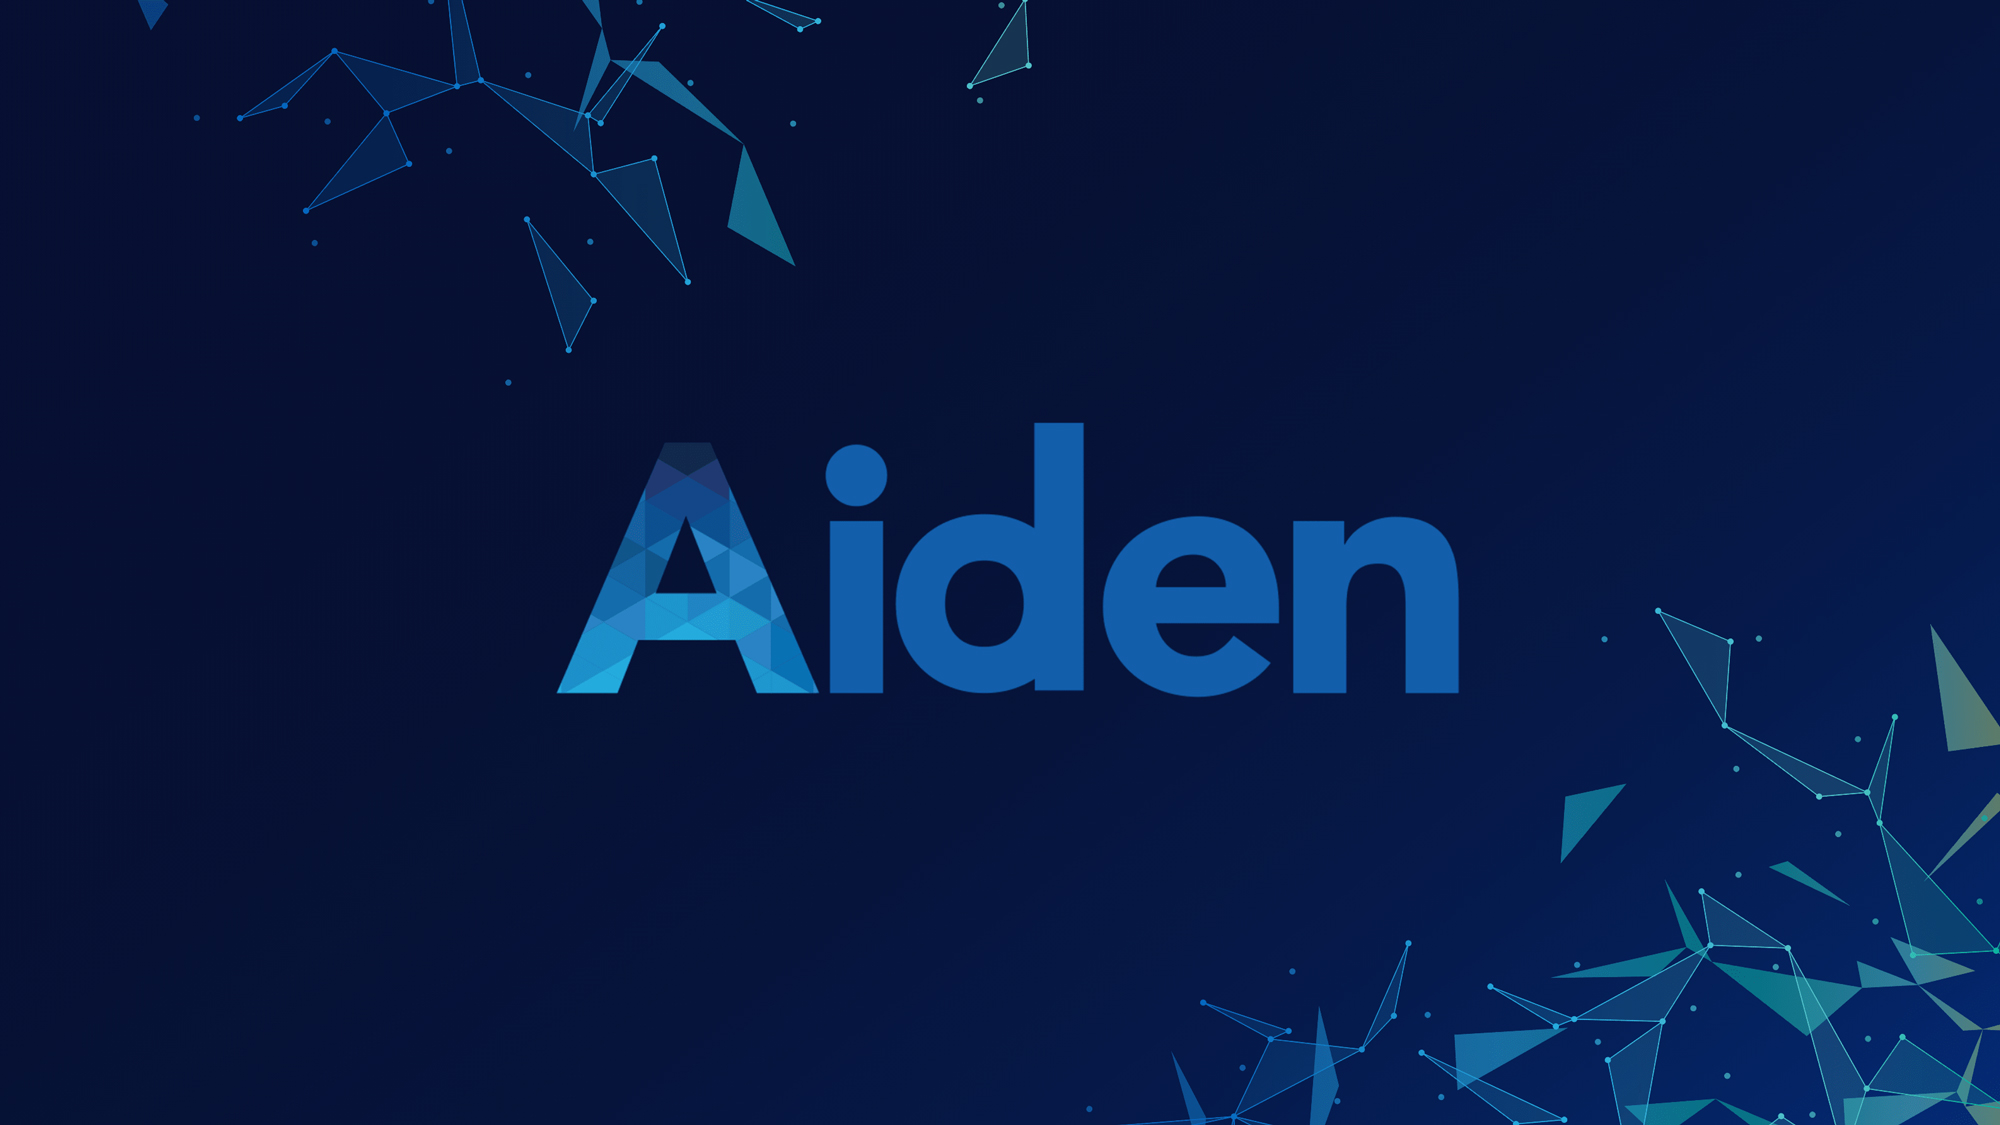 Aiden logo on a navy blue background.